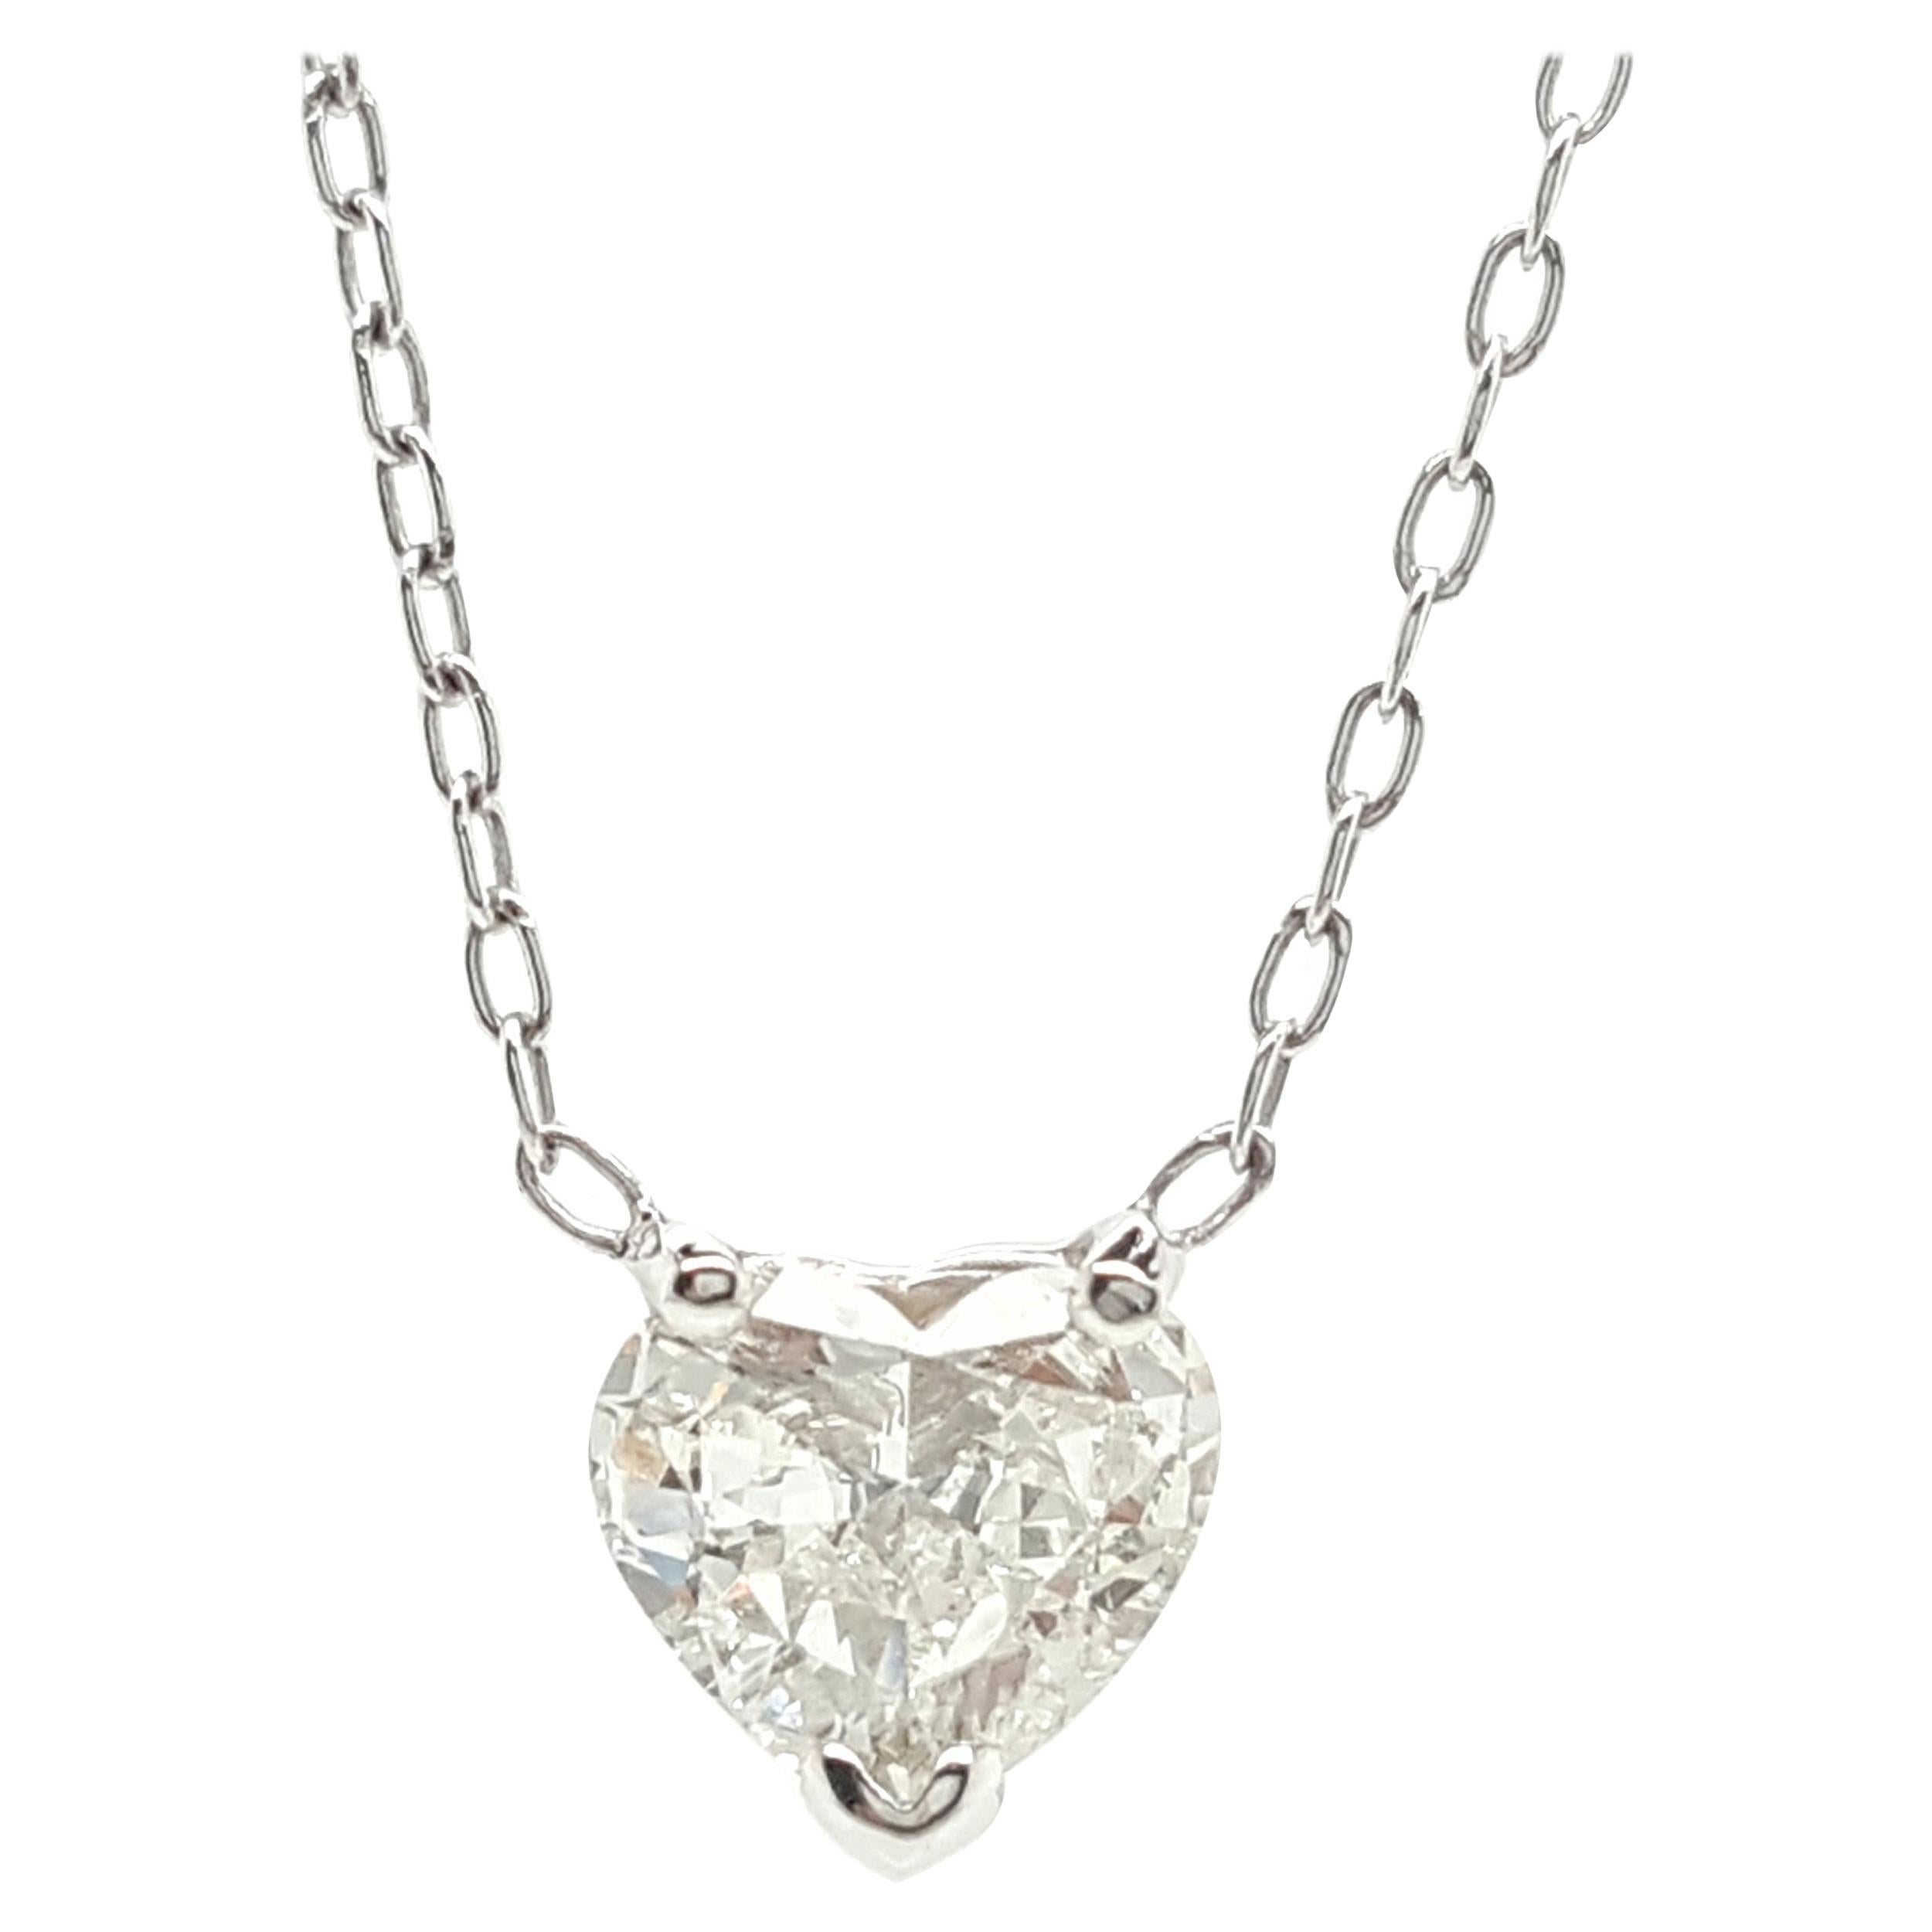 14 Karat White Gold 0.70 Carat Heart Cut Diamond Pendant Necklace